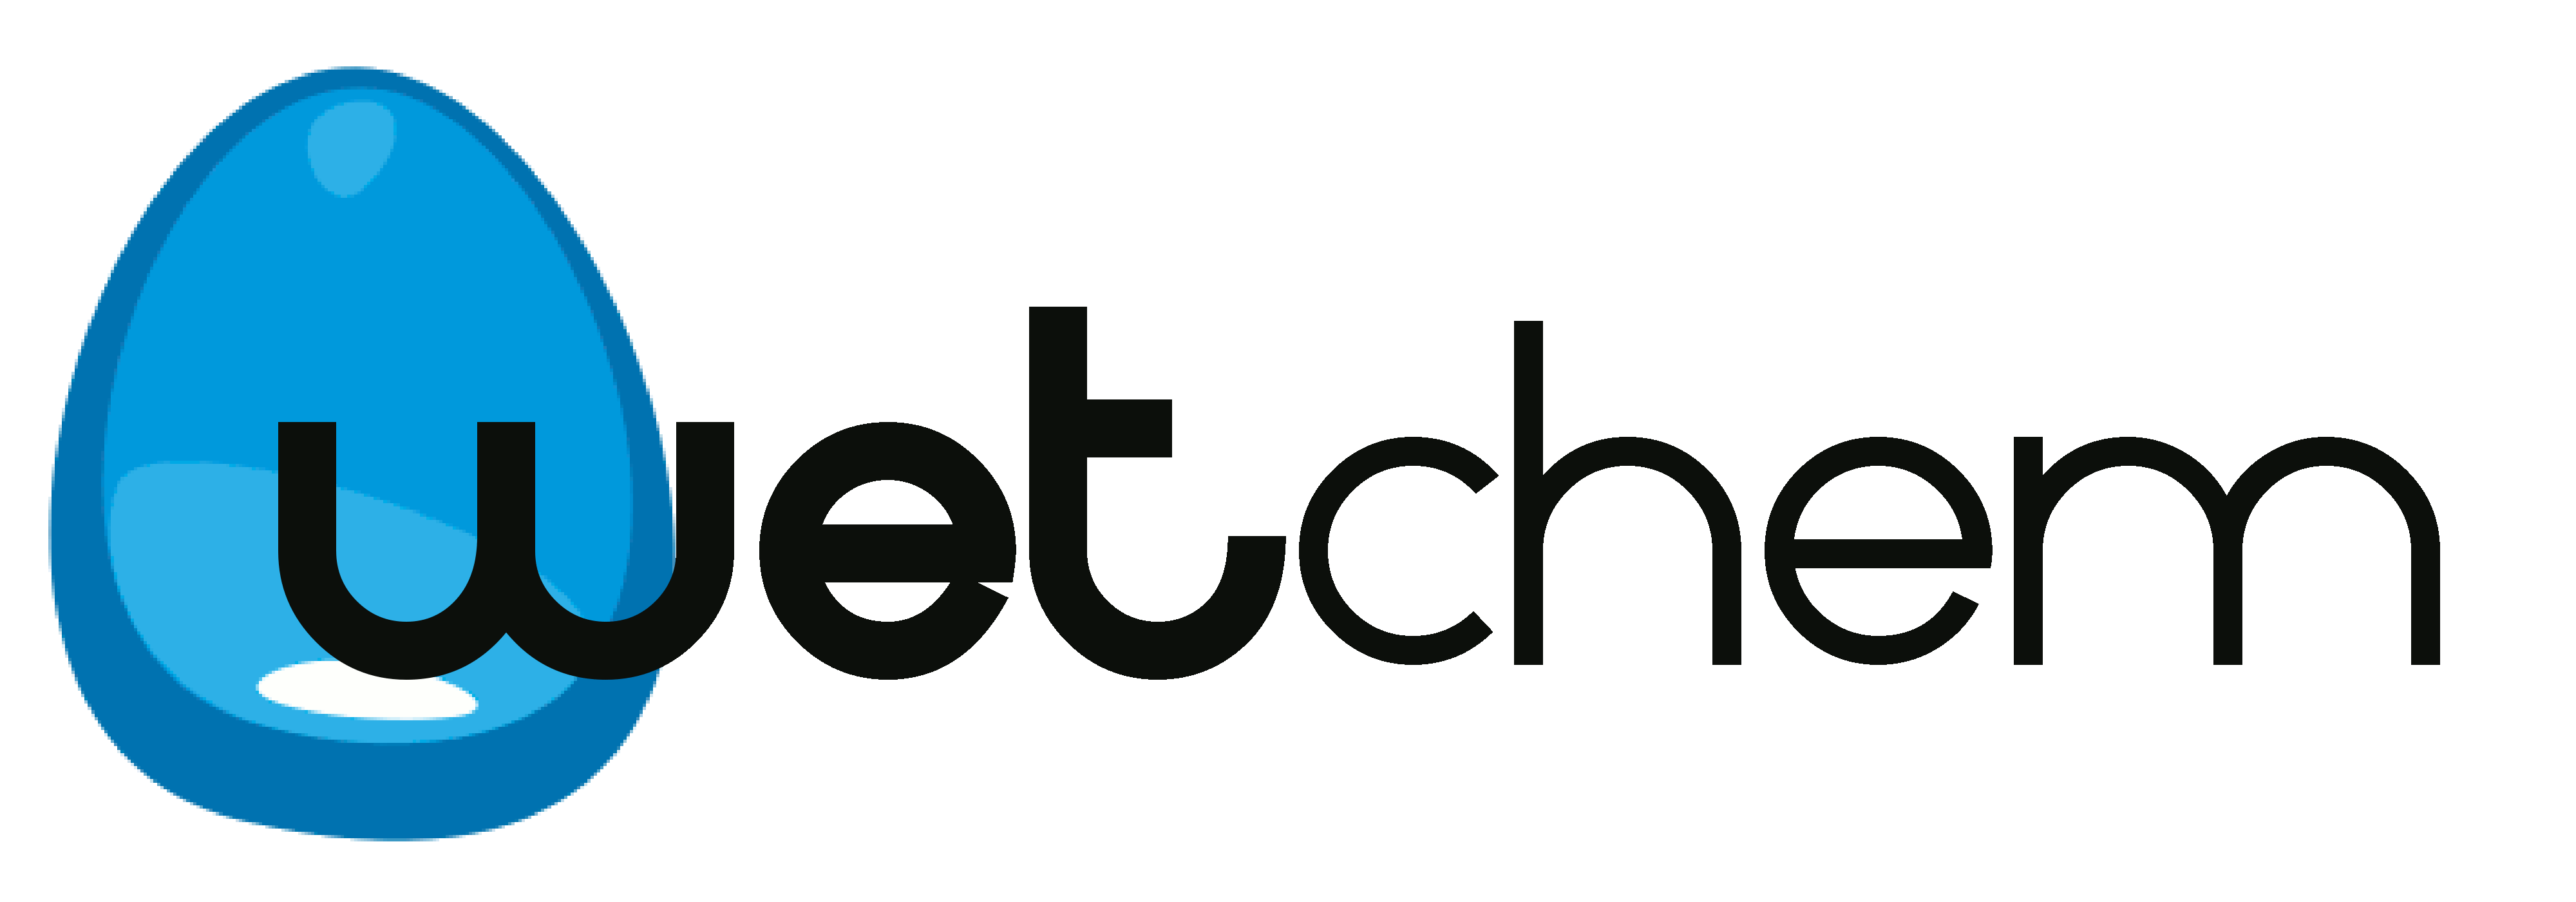 White Earth Trading Cc logo